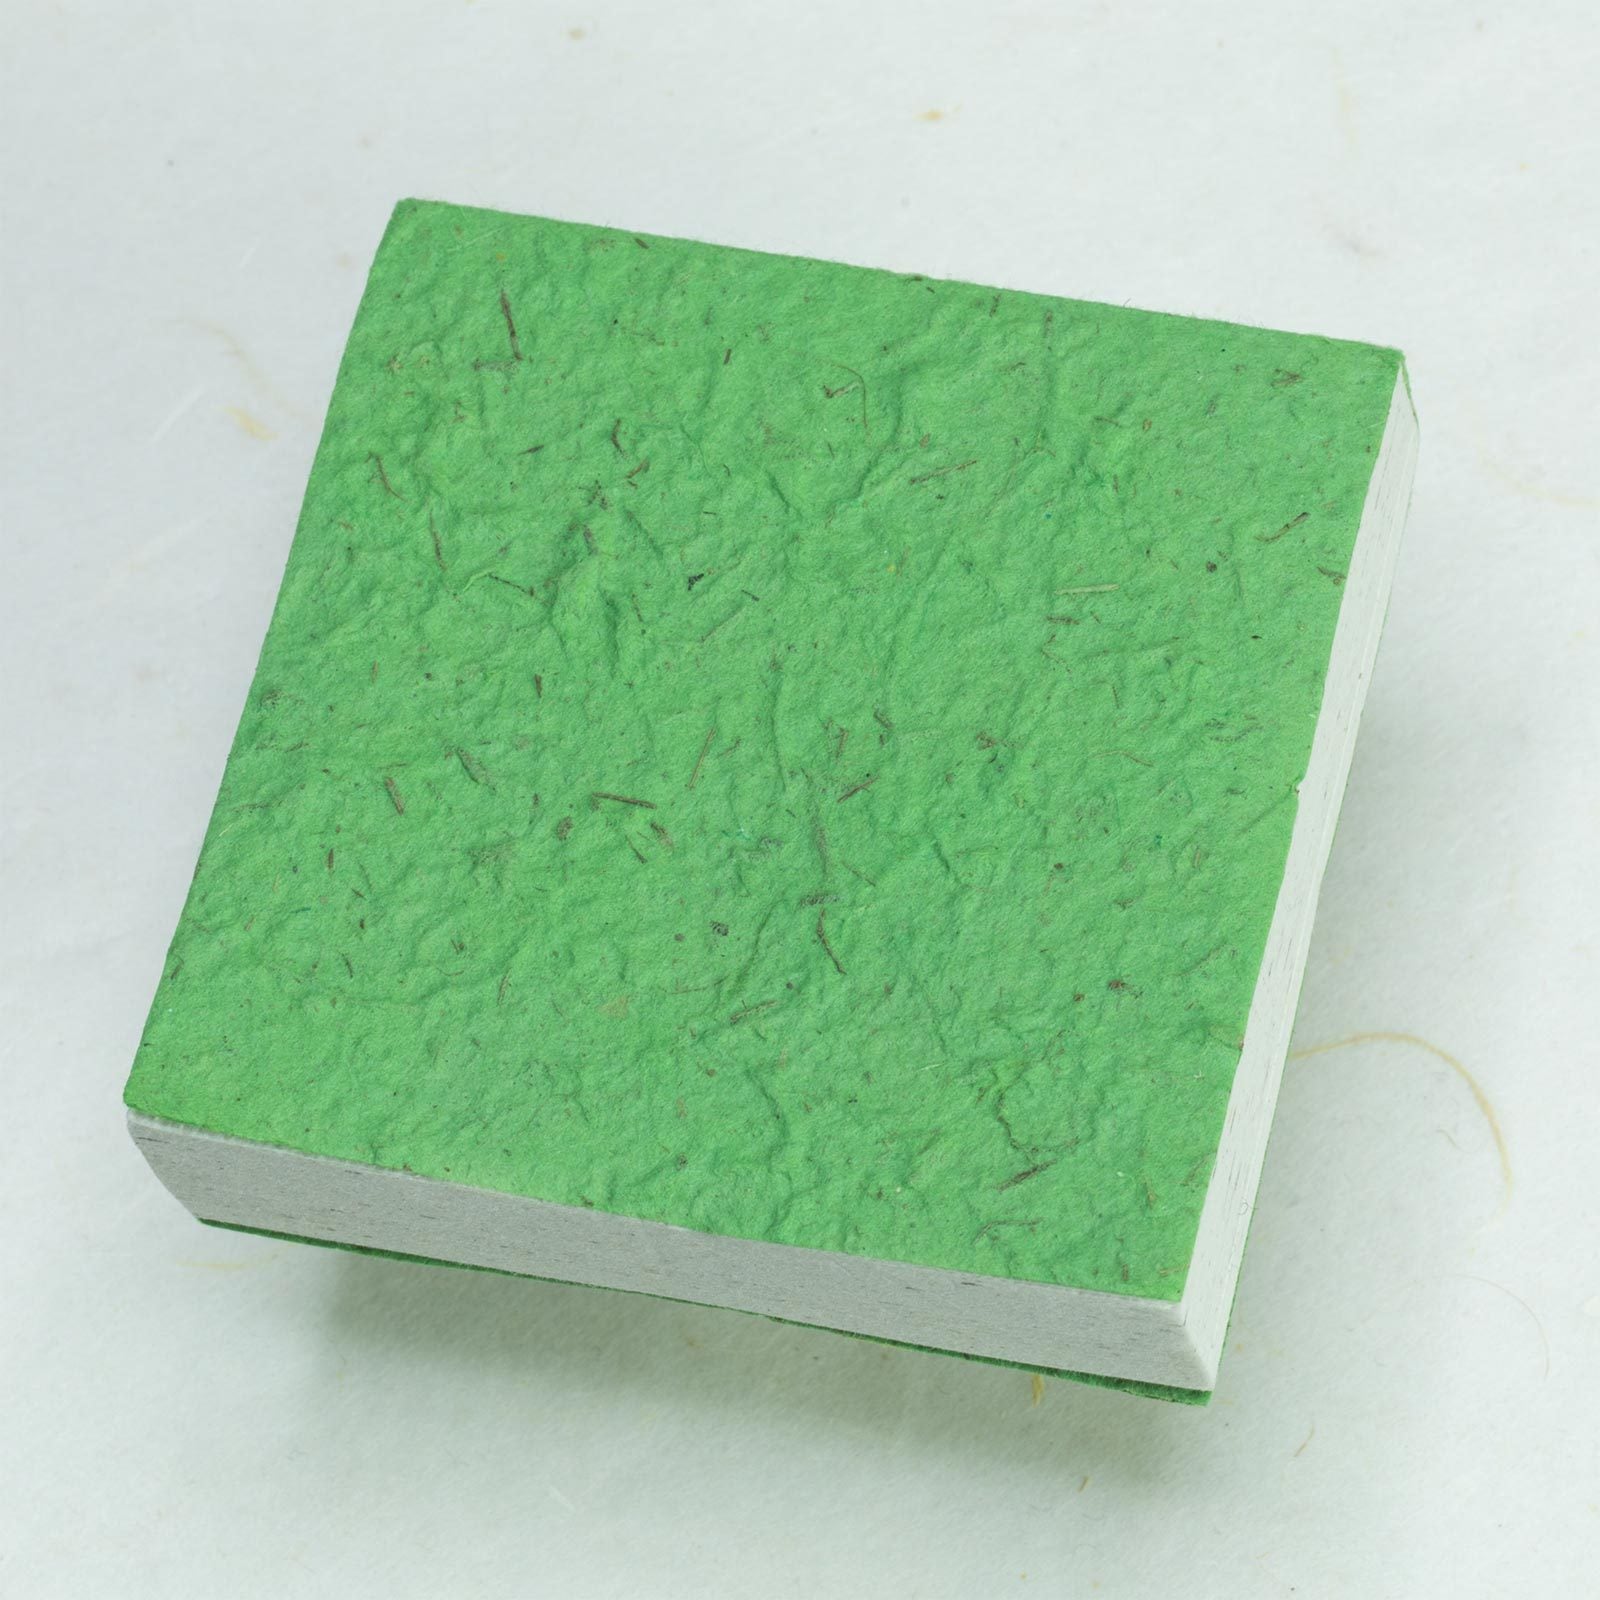 Flower Garden Scratch Pad set - 100% Organic, Tree-Free Elephant Paper –  The POOPOOPAPER Online Store